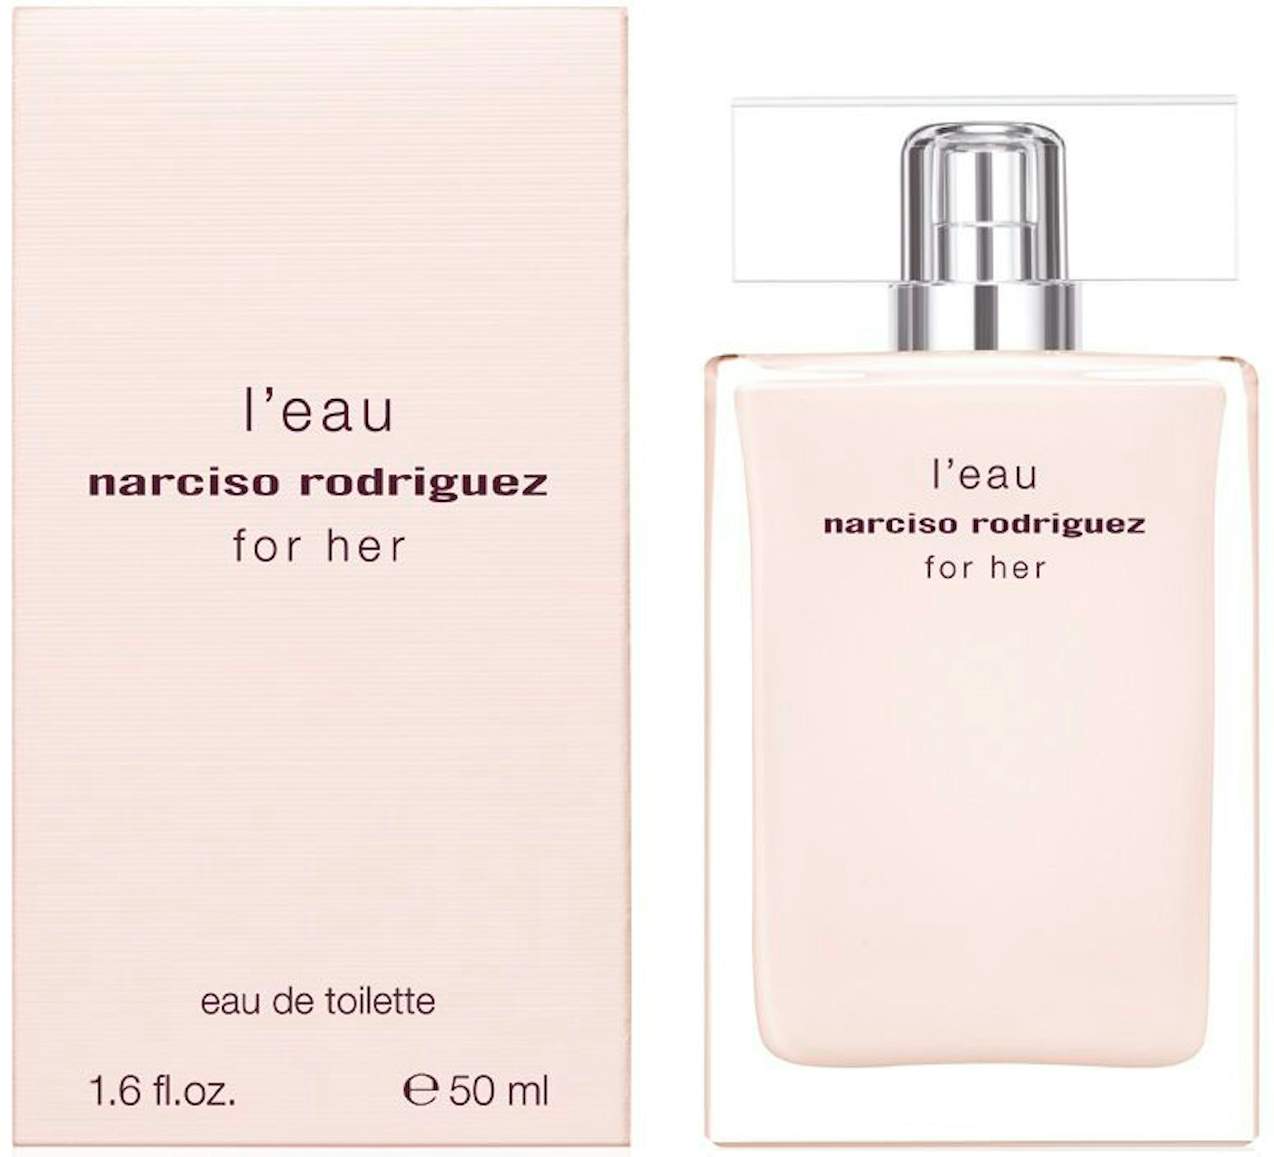 Нарциссо парфюм женский